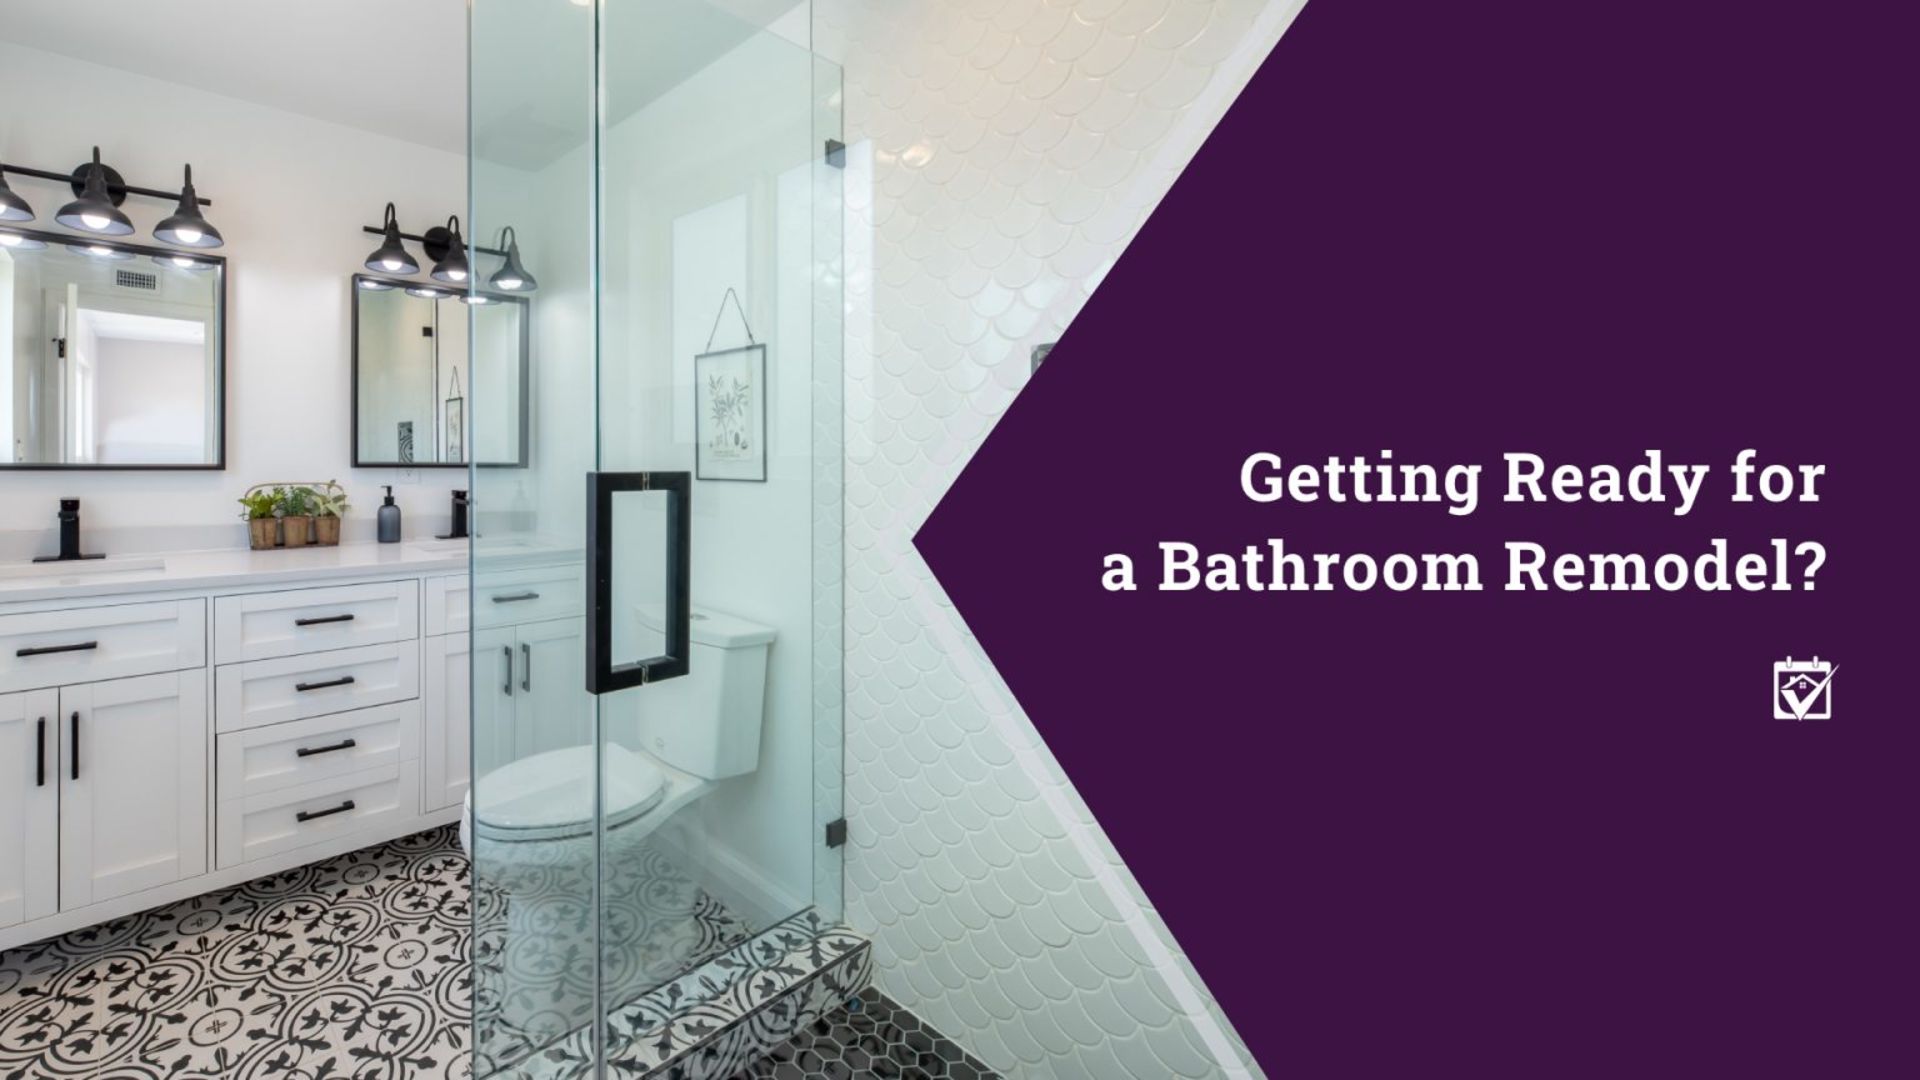 Getting Ready for a Bathroom Remodel?